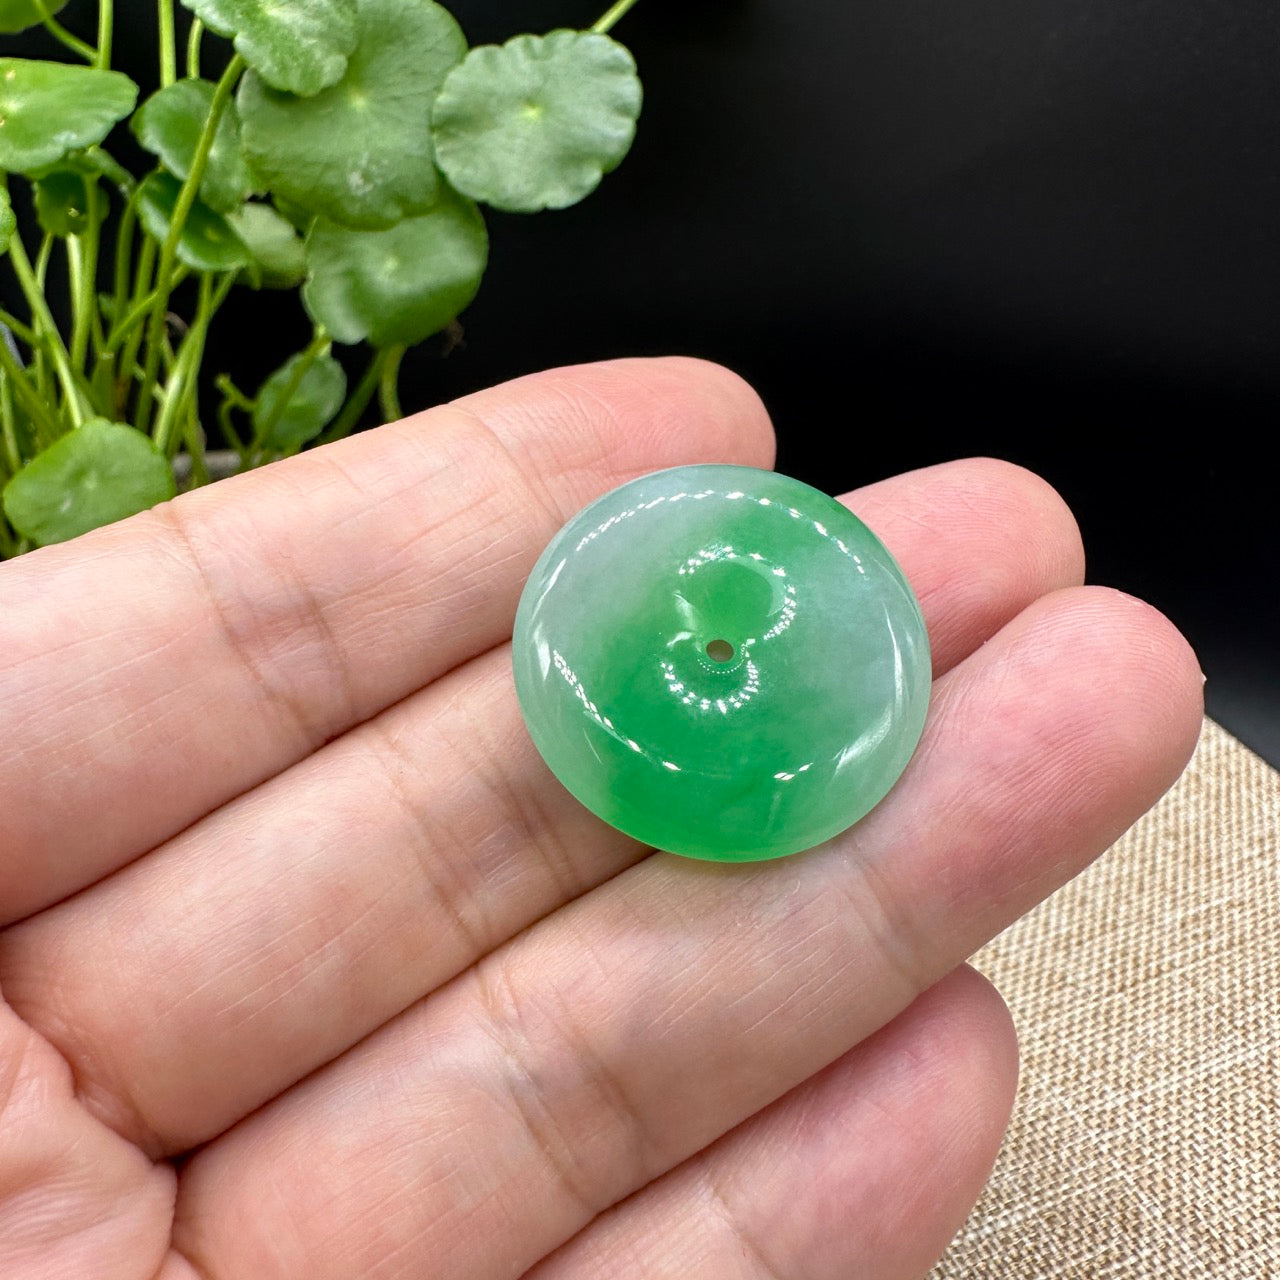 RealJade® "Good Luck Button" Necklace Ice green Jadeite Jade Lucky Ping An Kou Pendant